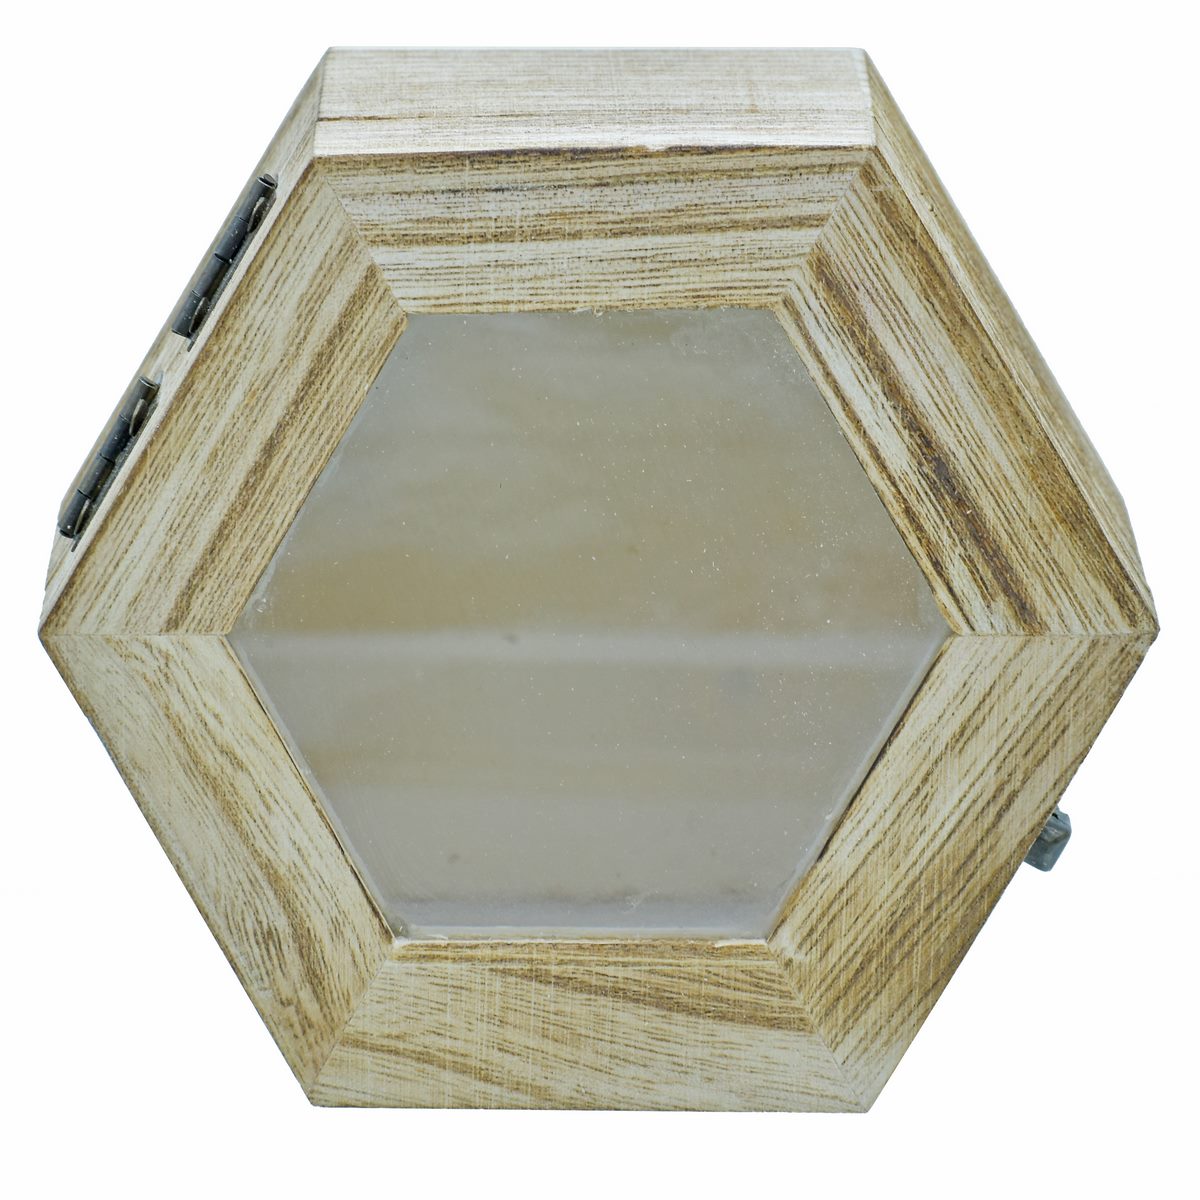 jags-mumbai Wooden Box Wooden Empty Box Top Window Antique Finish Hexagon